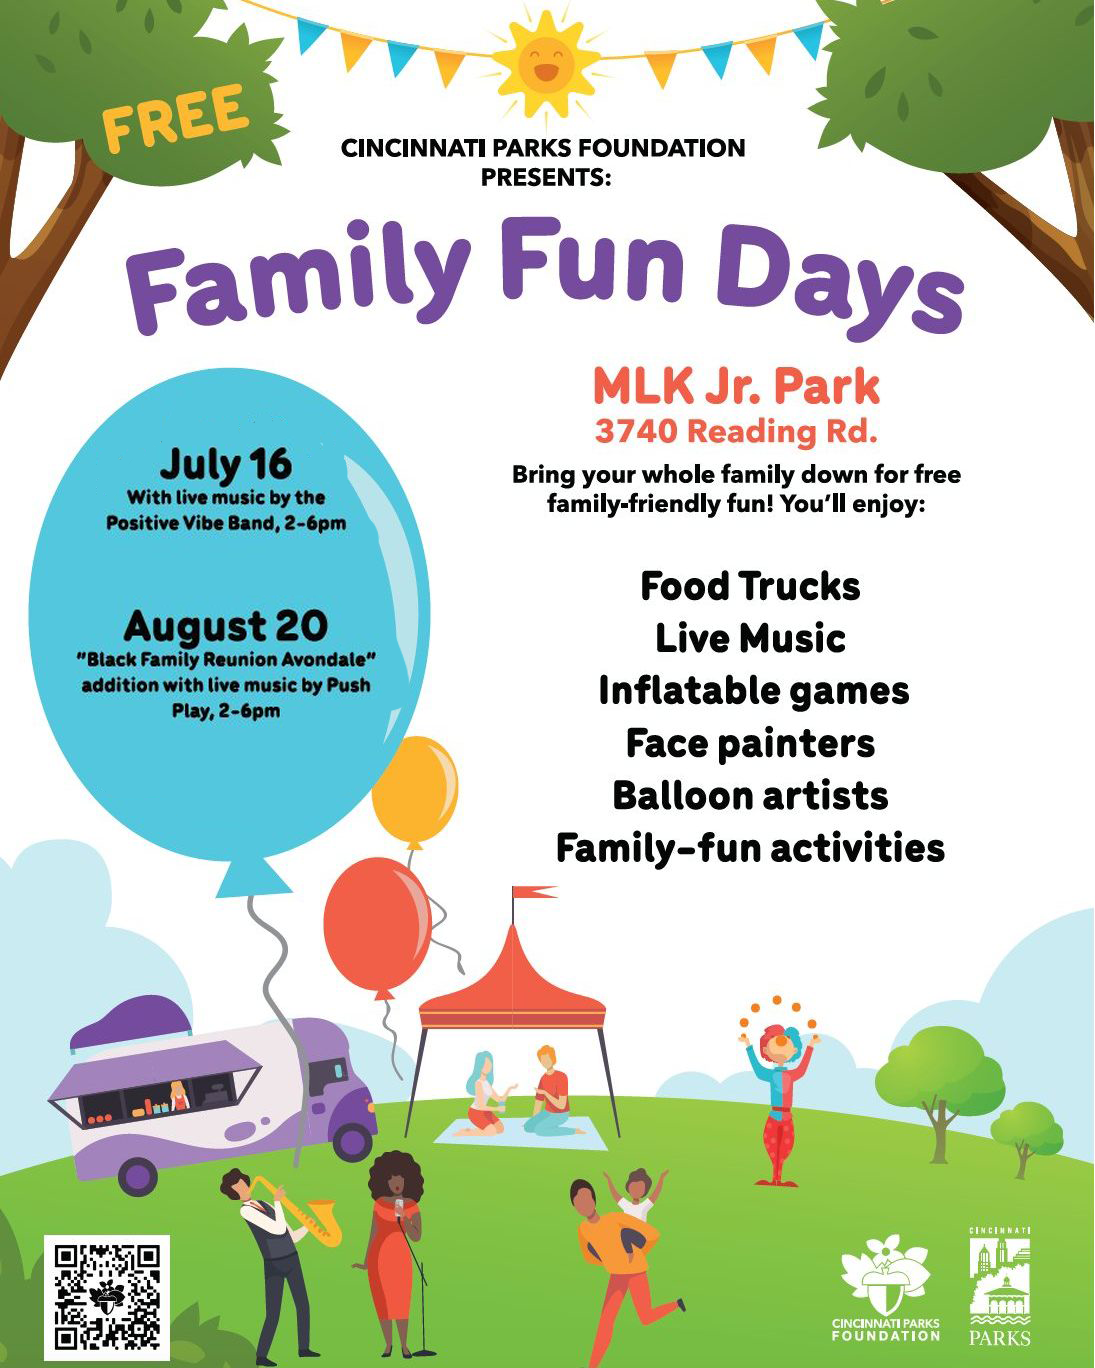 Family Fun Days at MLK Jr. Park: Summer 2022